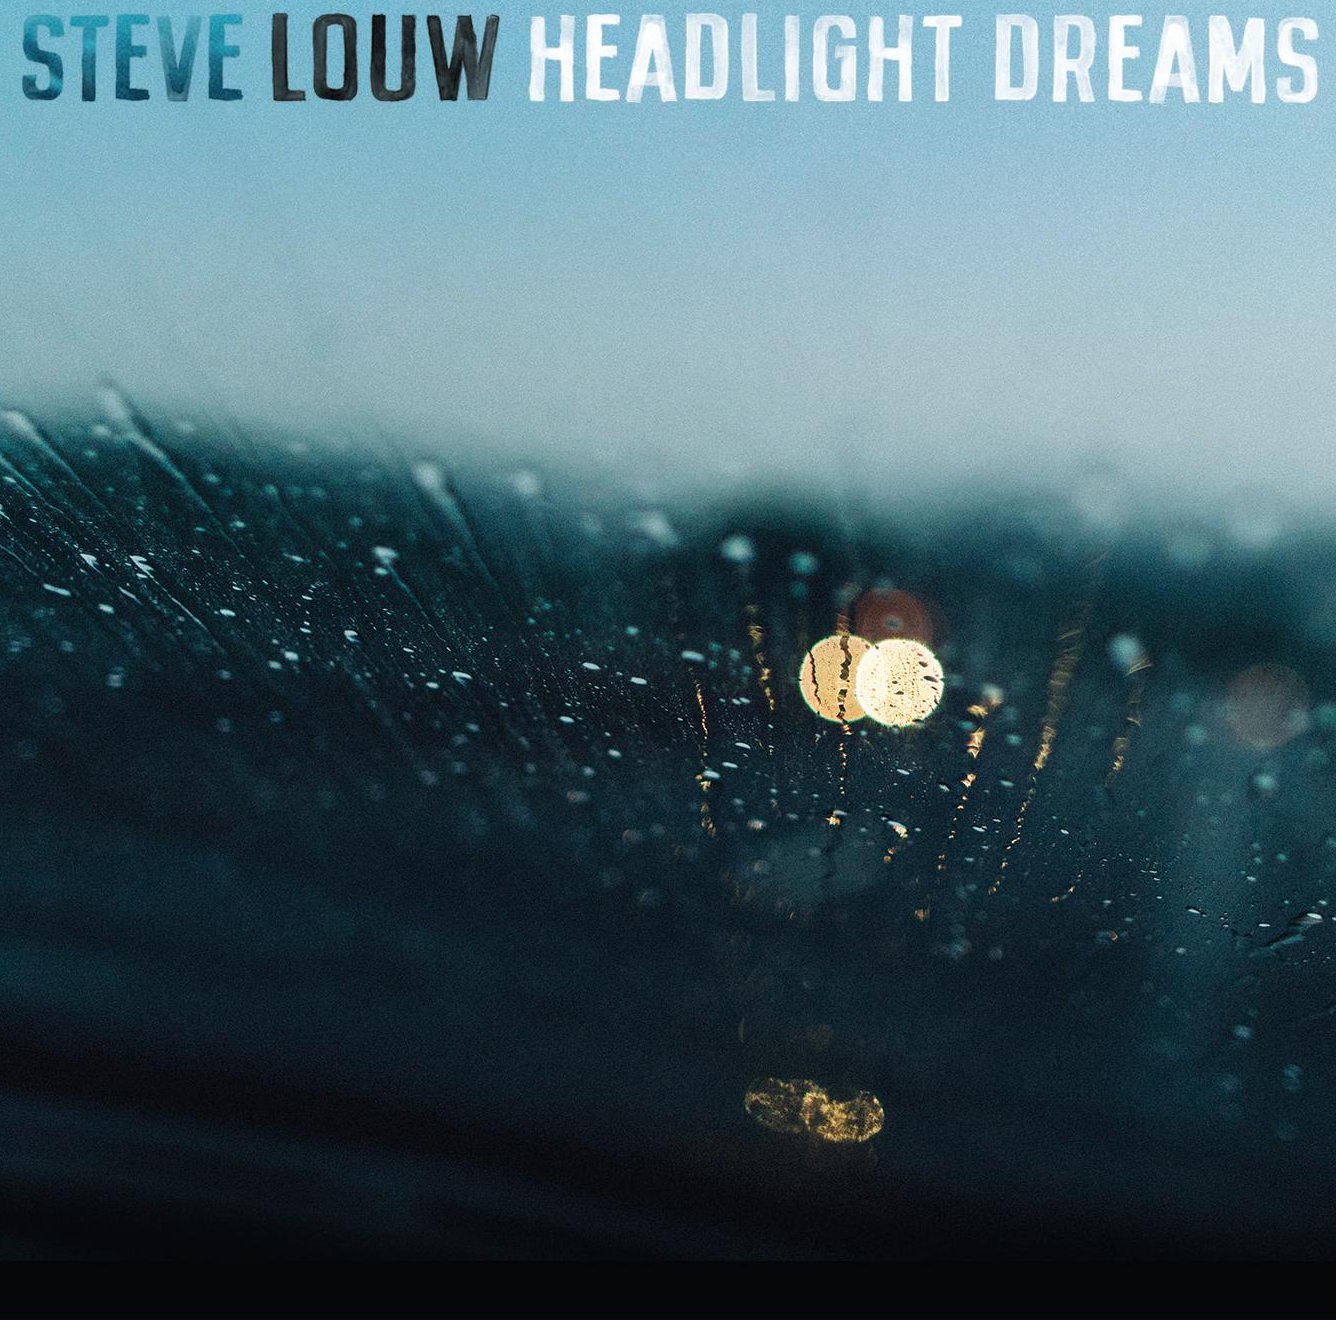 Headlight Dreams